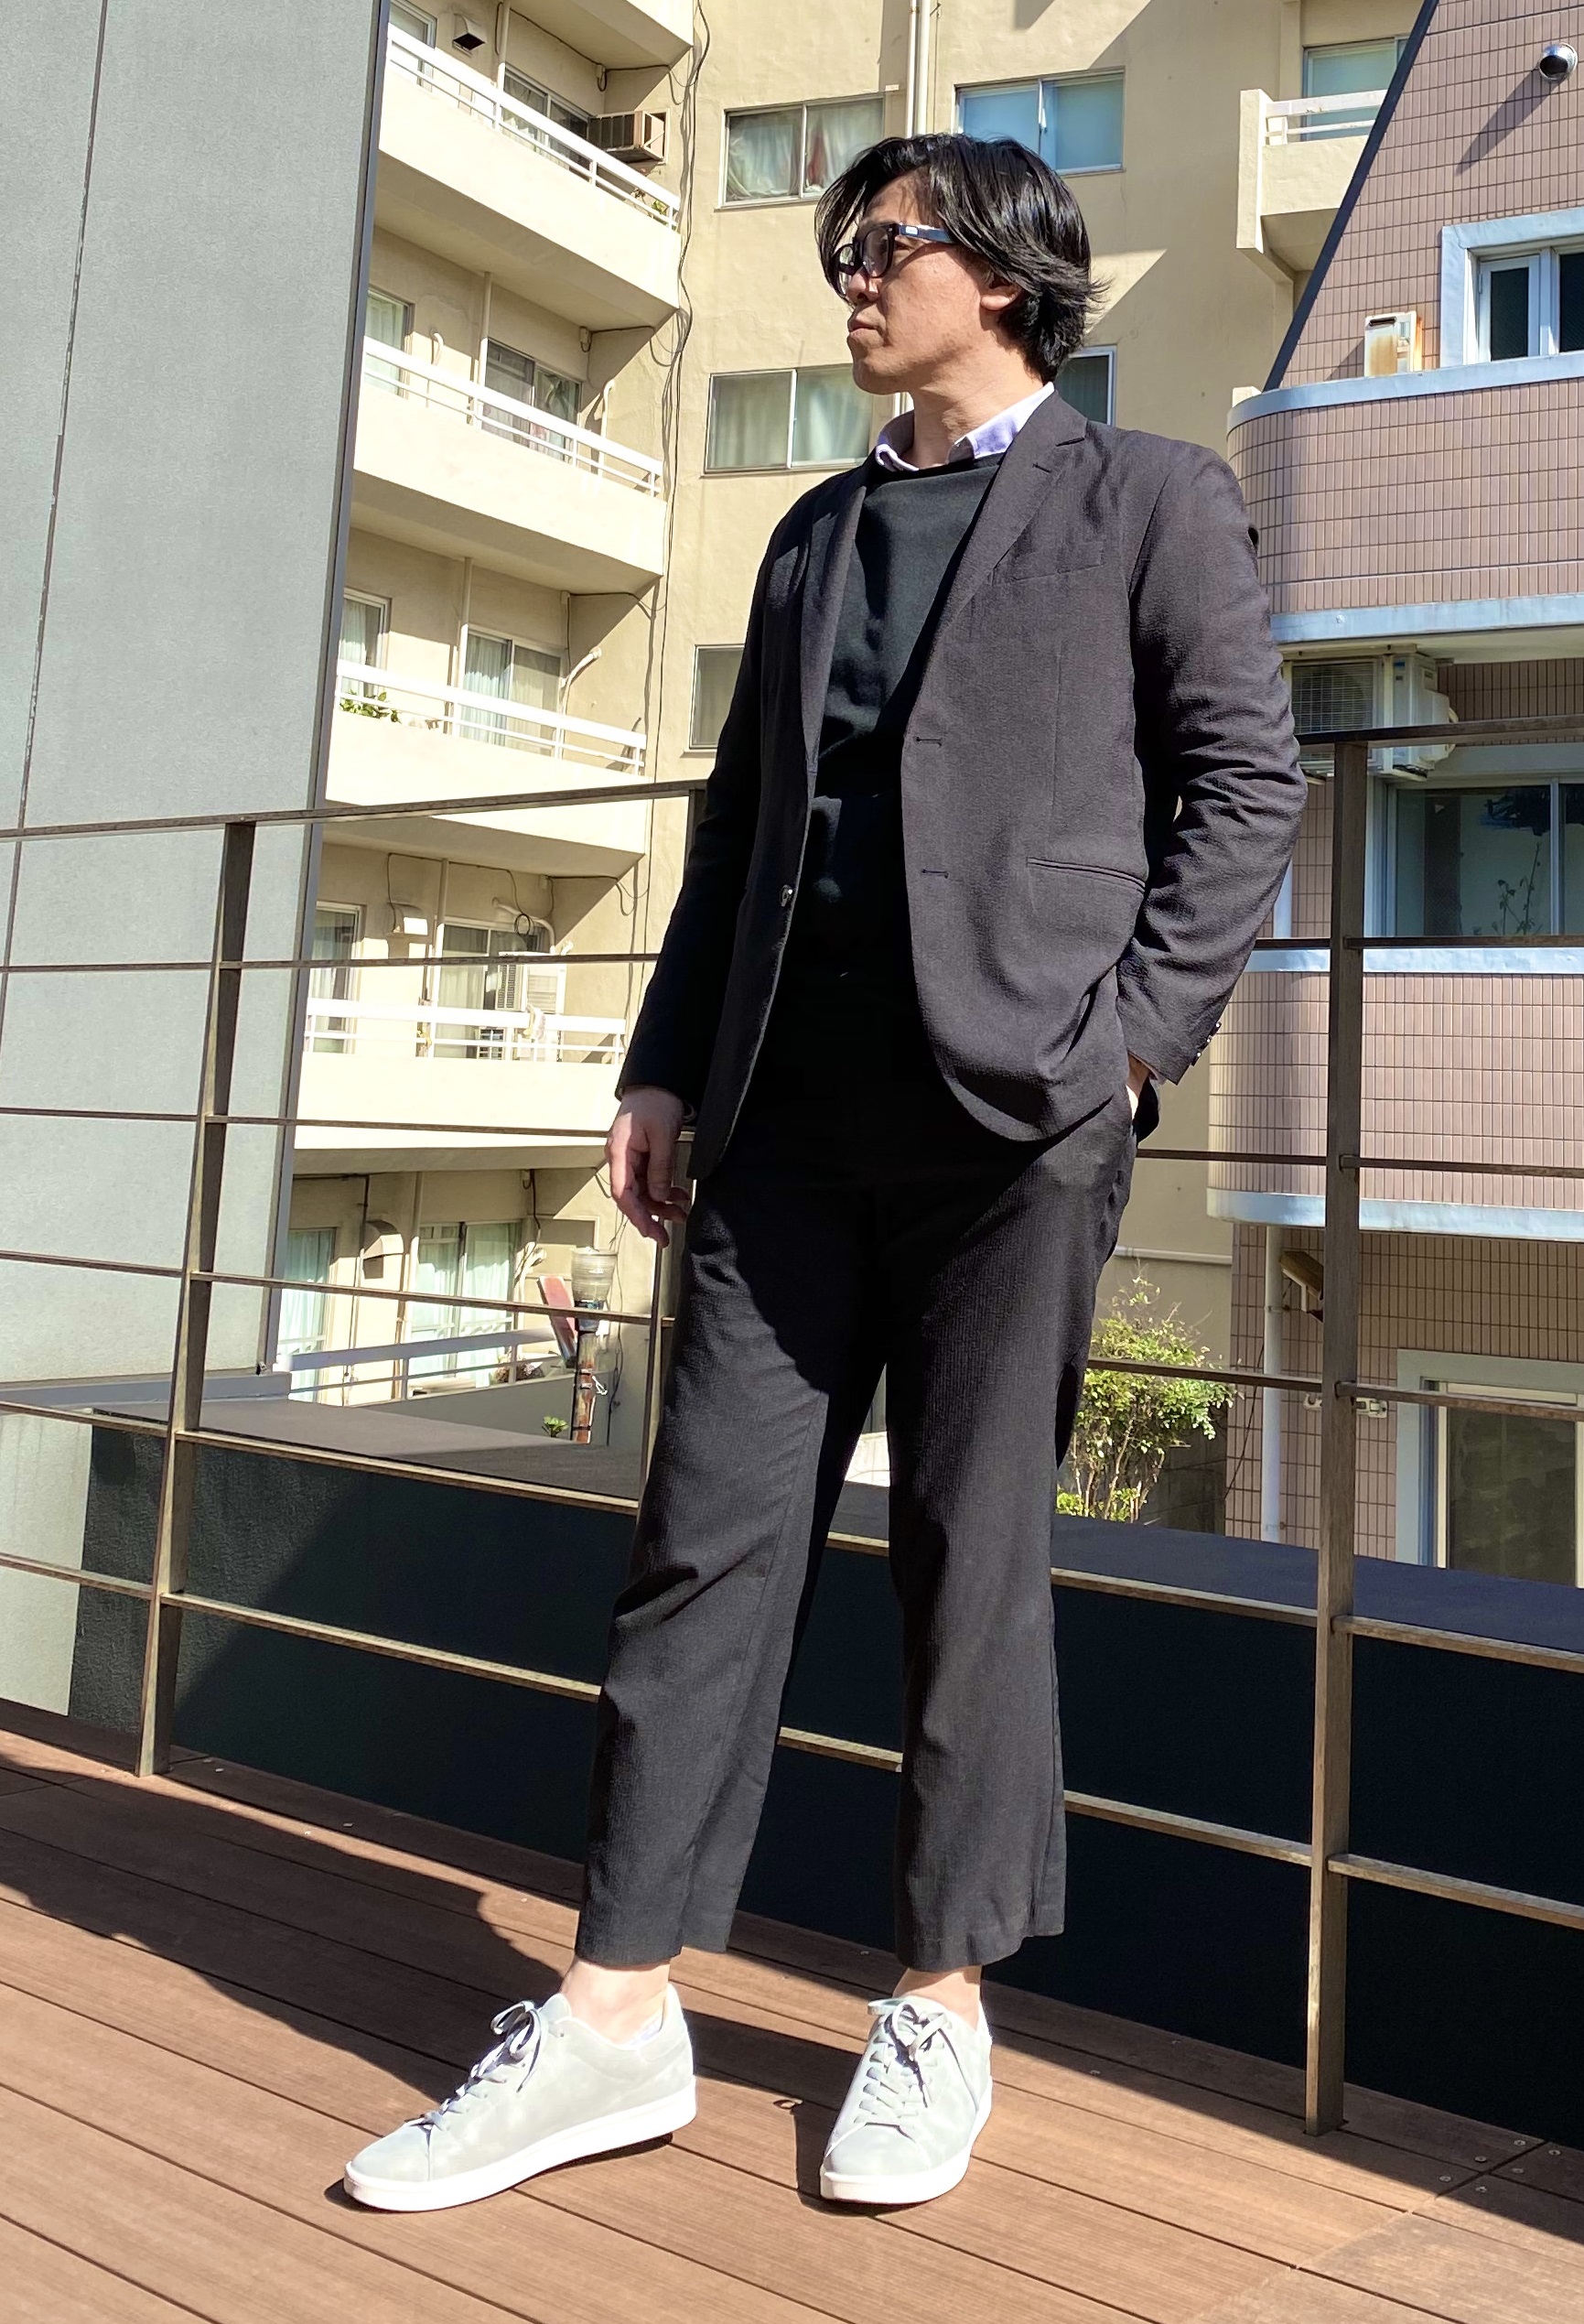 Okamoto Journal Vol 05 スーツ スニーカー 脱げないココピタ スーツ をカジュアルに着こなす秘訣とは 岡本株式会社のプレスリリース